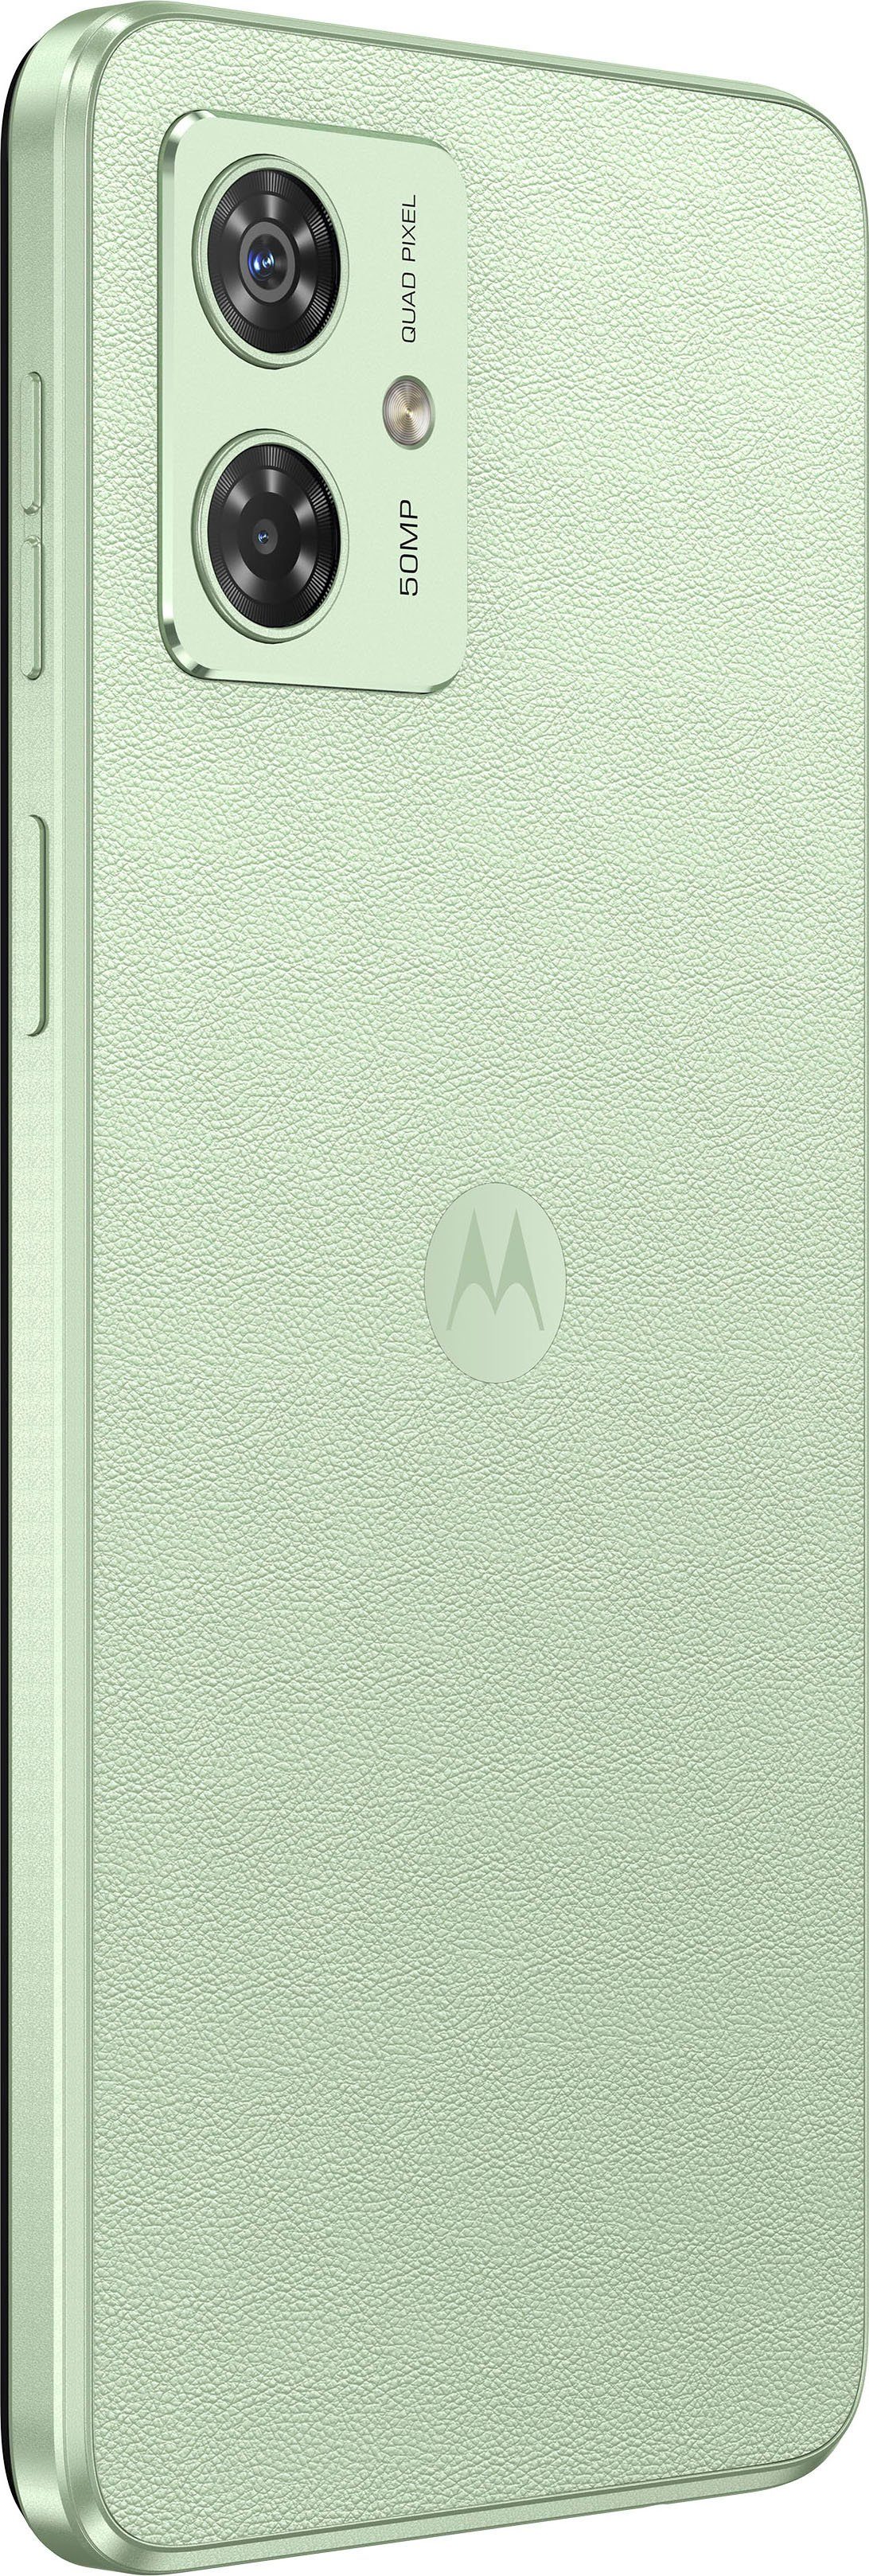 Motorola moto g54 256 Smartphone MP (16,51 GB grün Kamera) cm/6,5 Speicherplatz, mint Zoll, 50